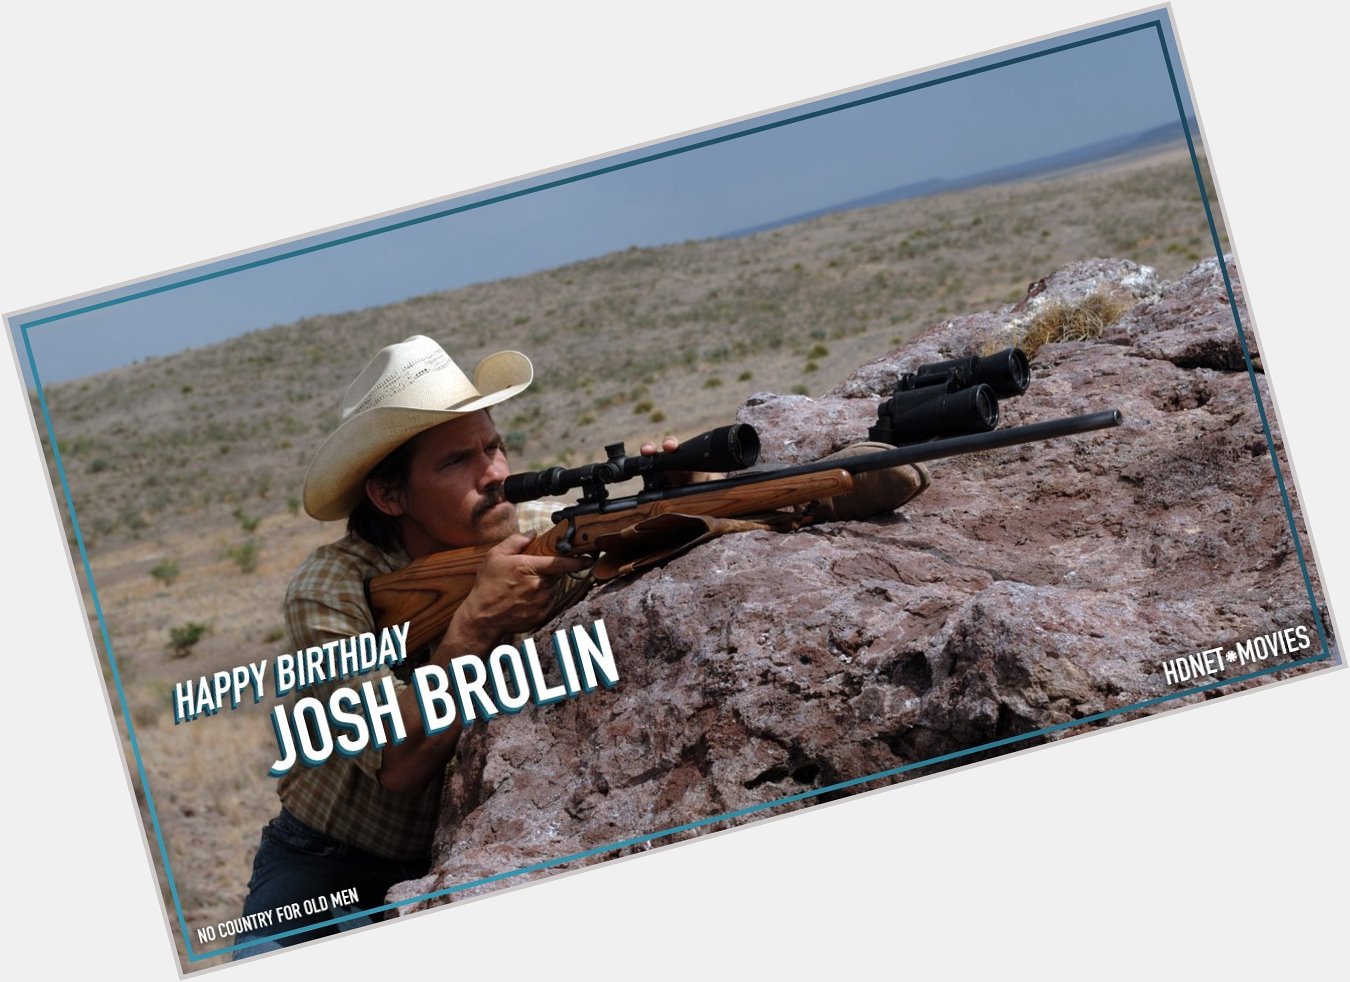 We want to wish Josh Brolin a very Happy Birthday today! 